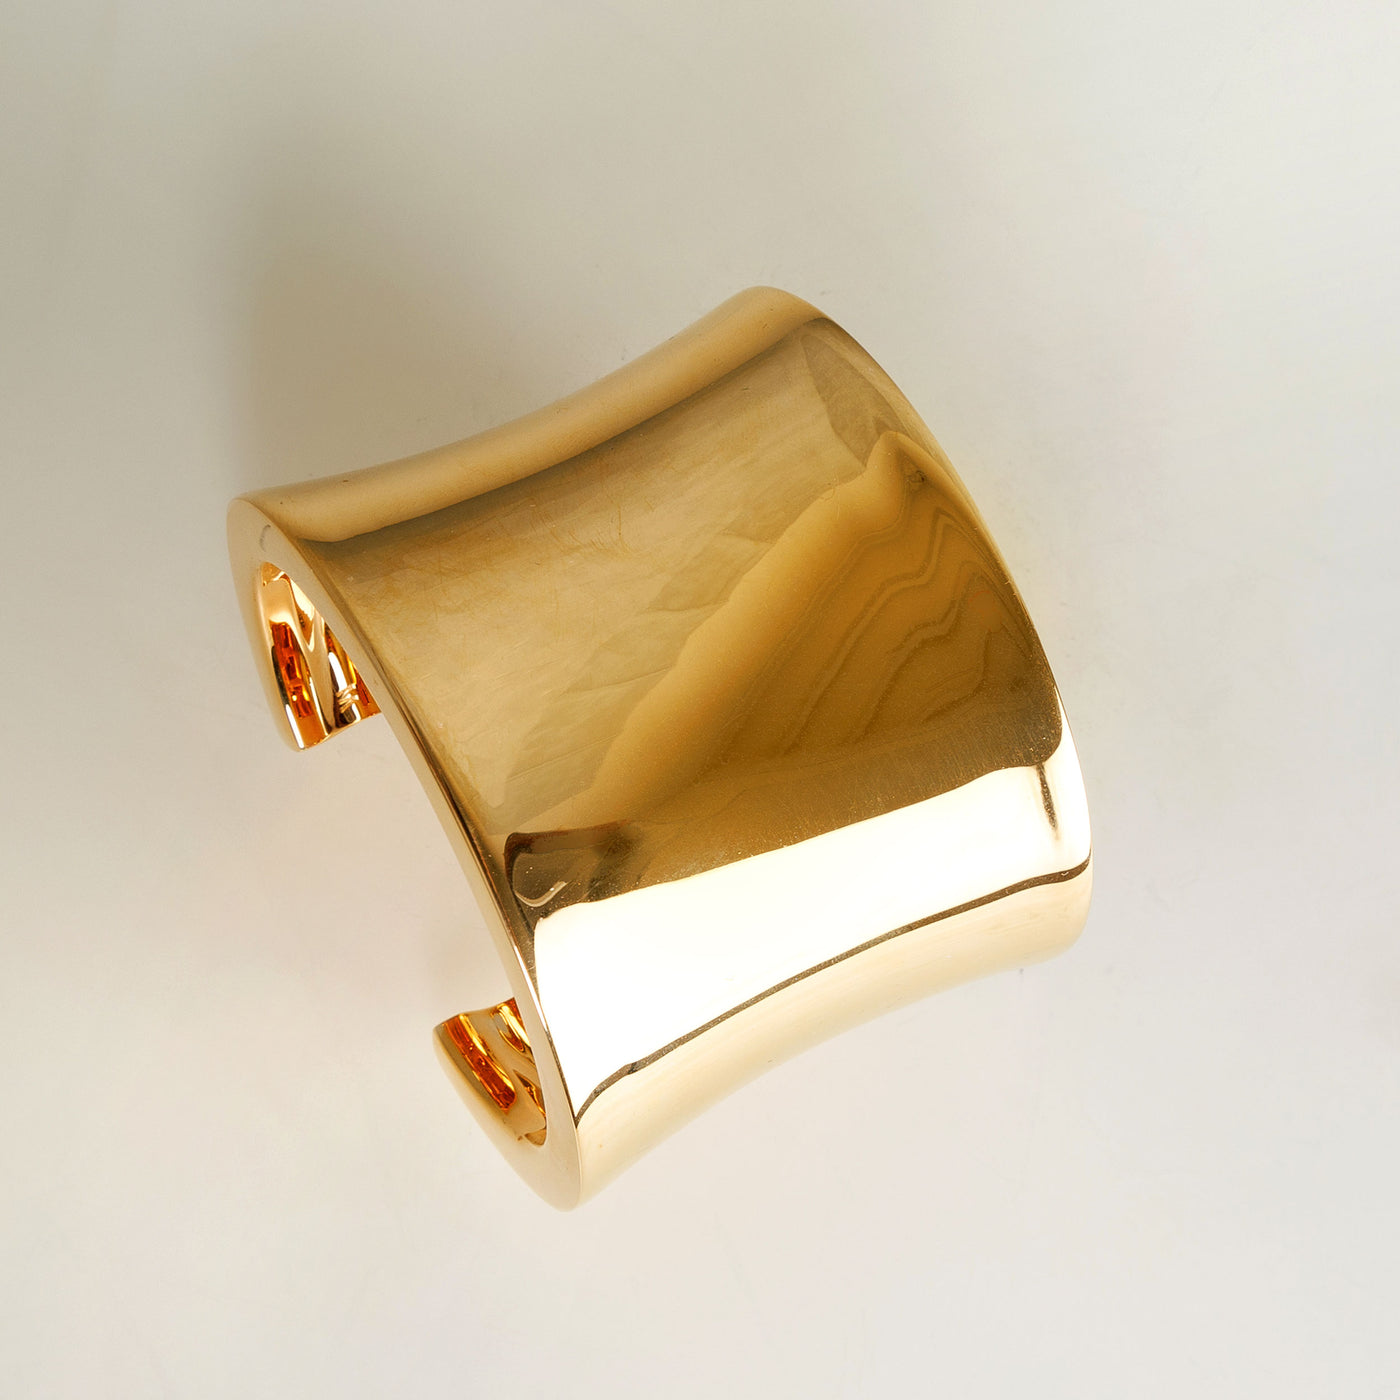 SAINT LAURENT curved gold cuff